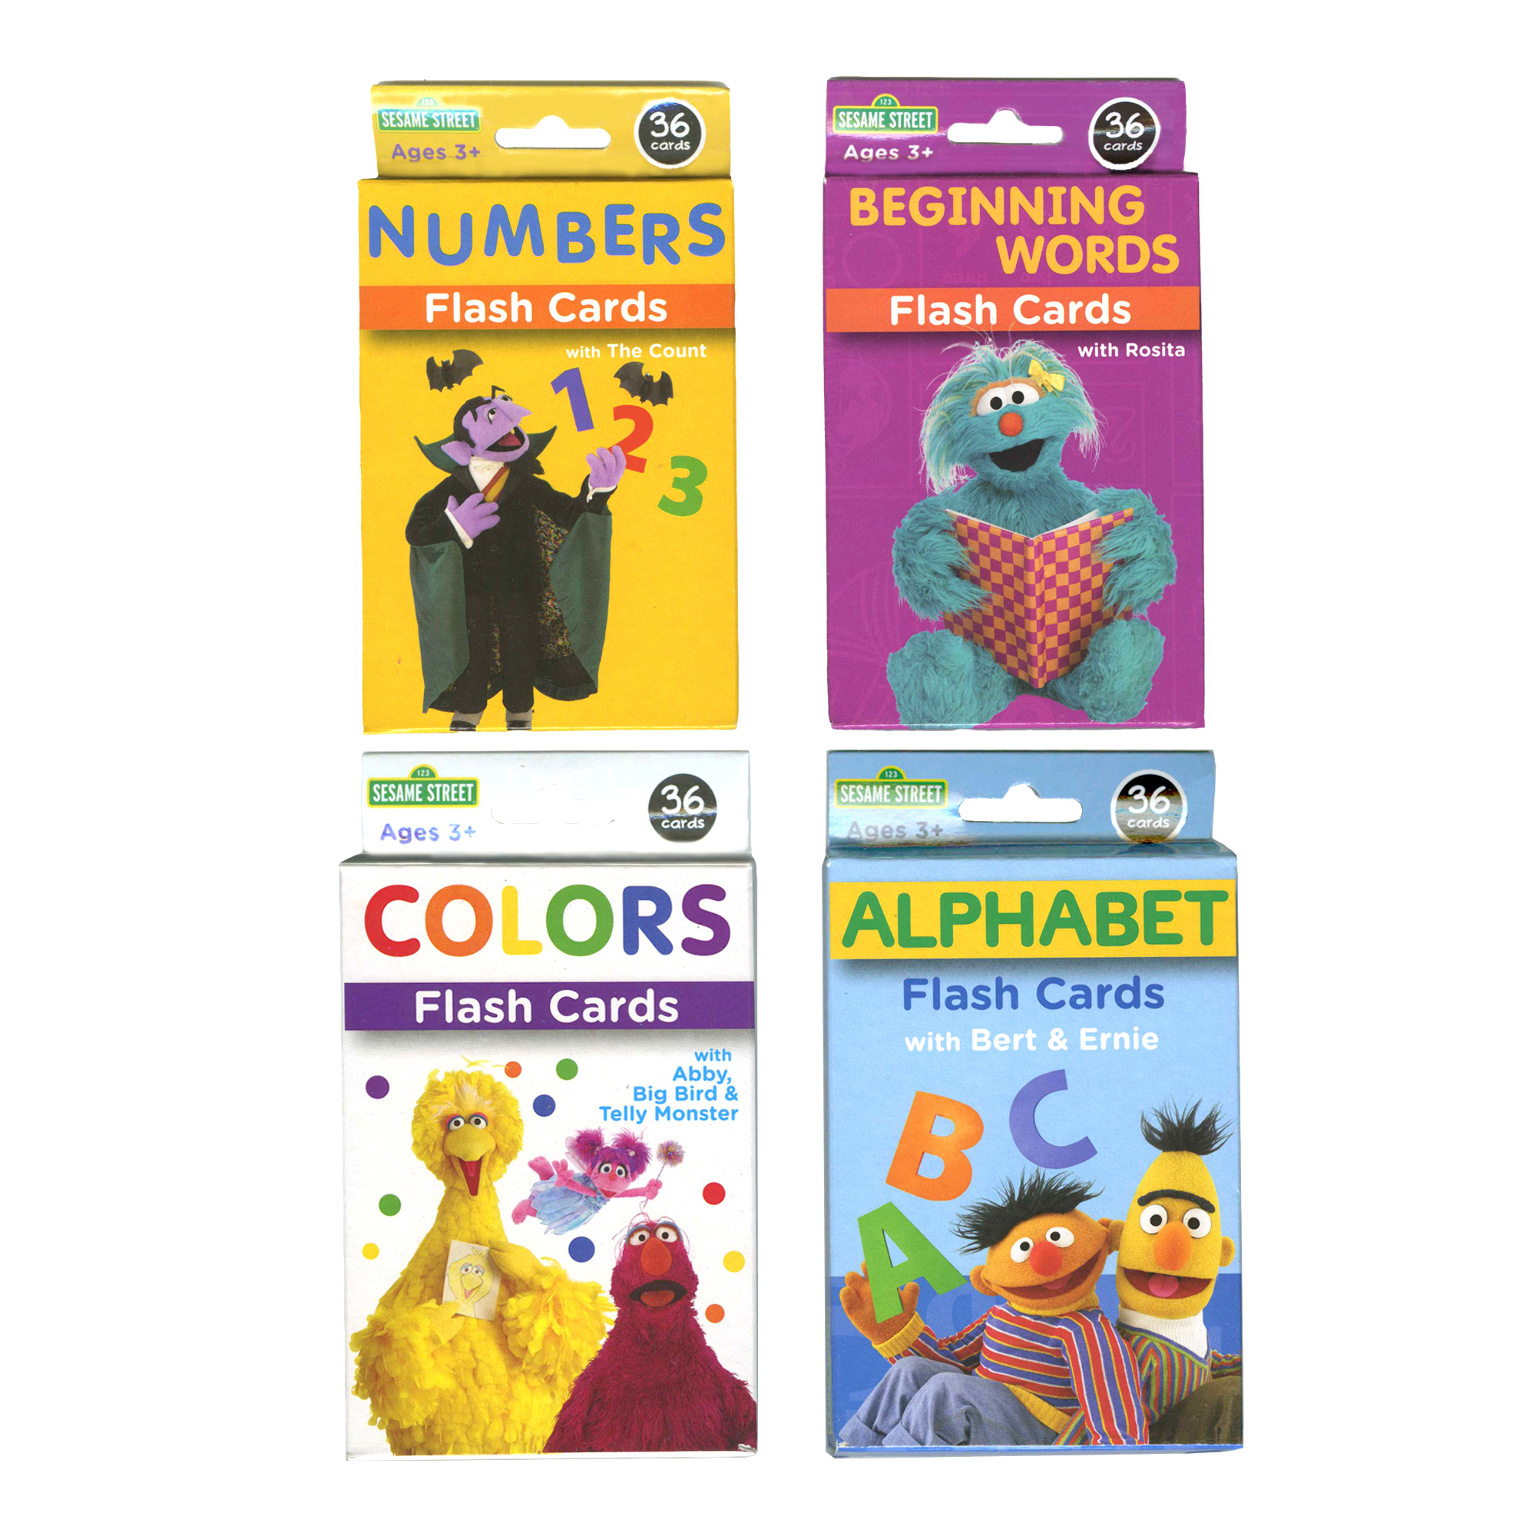 Sesame Street Kids Child-Safe Scissors Set for Toddlers and Preschoolers - Bundle with Sesame Street Safety Scissors and Sesame Street Coloring Book